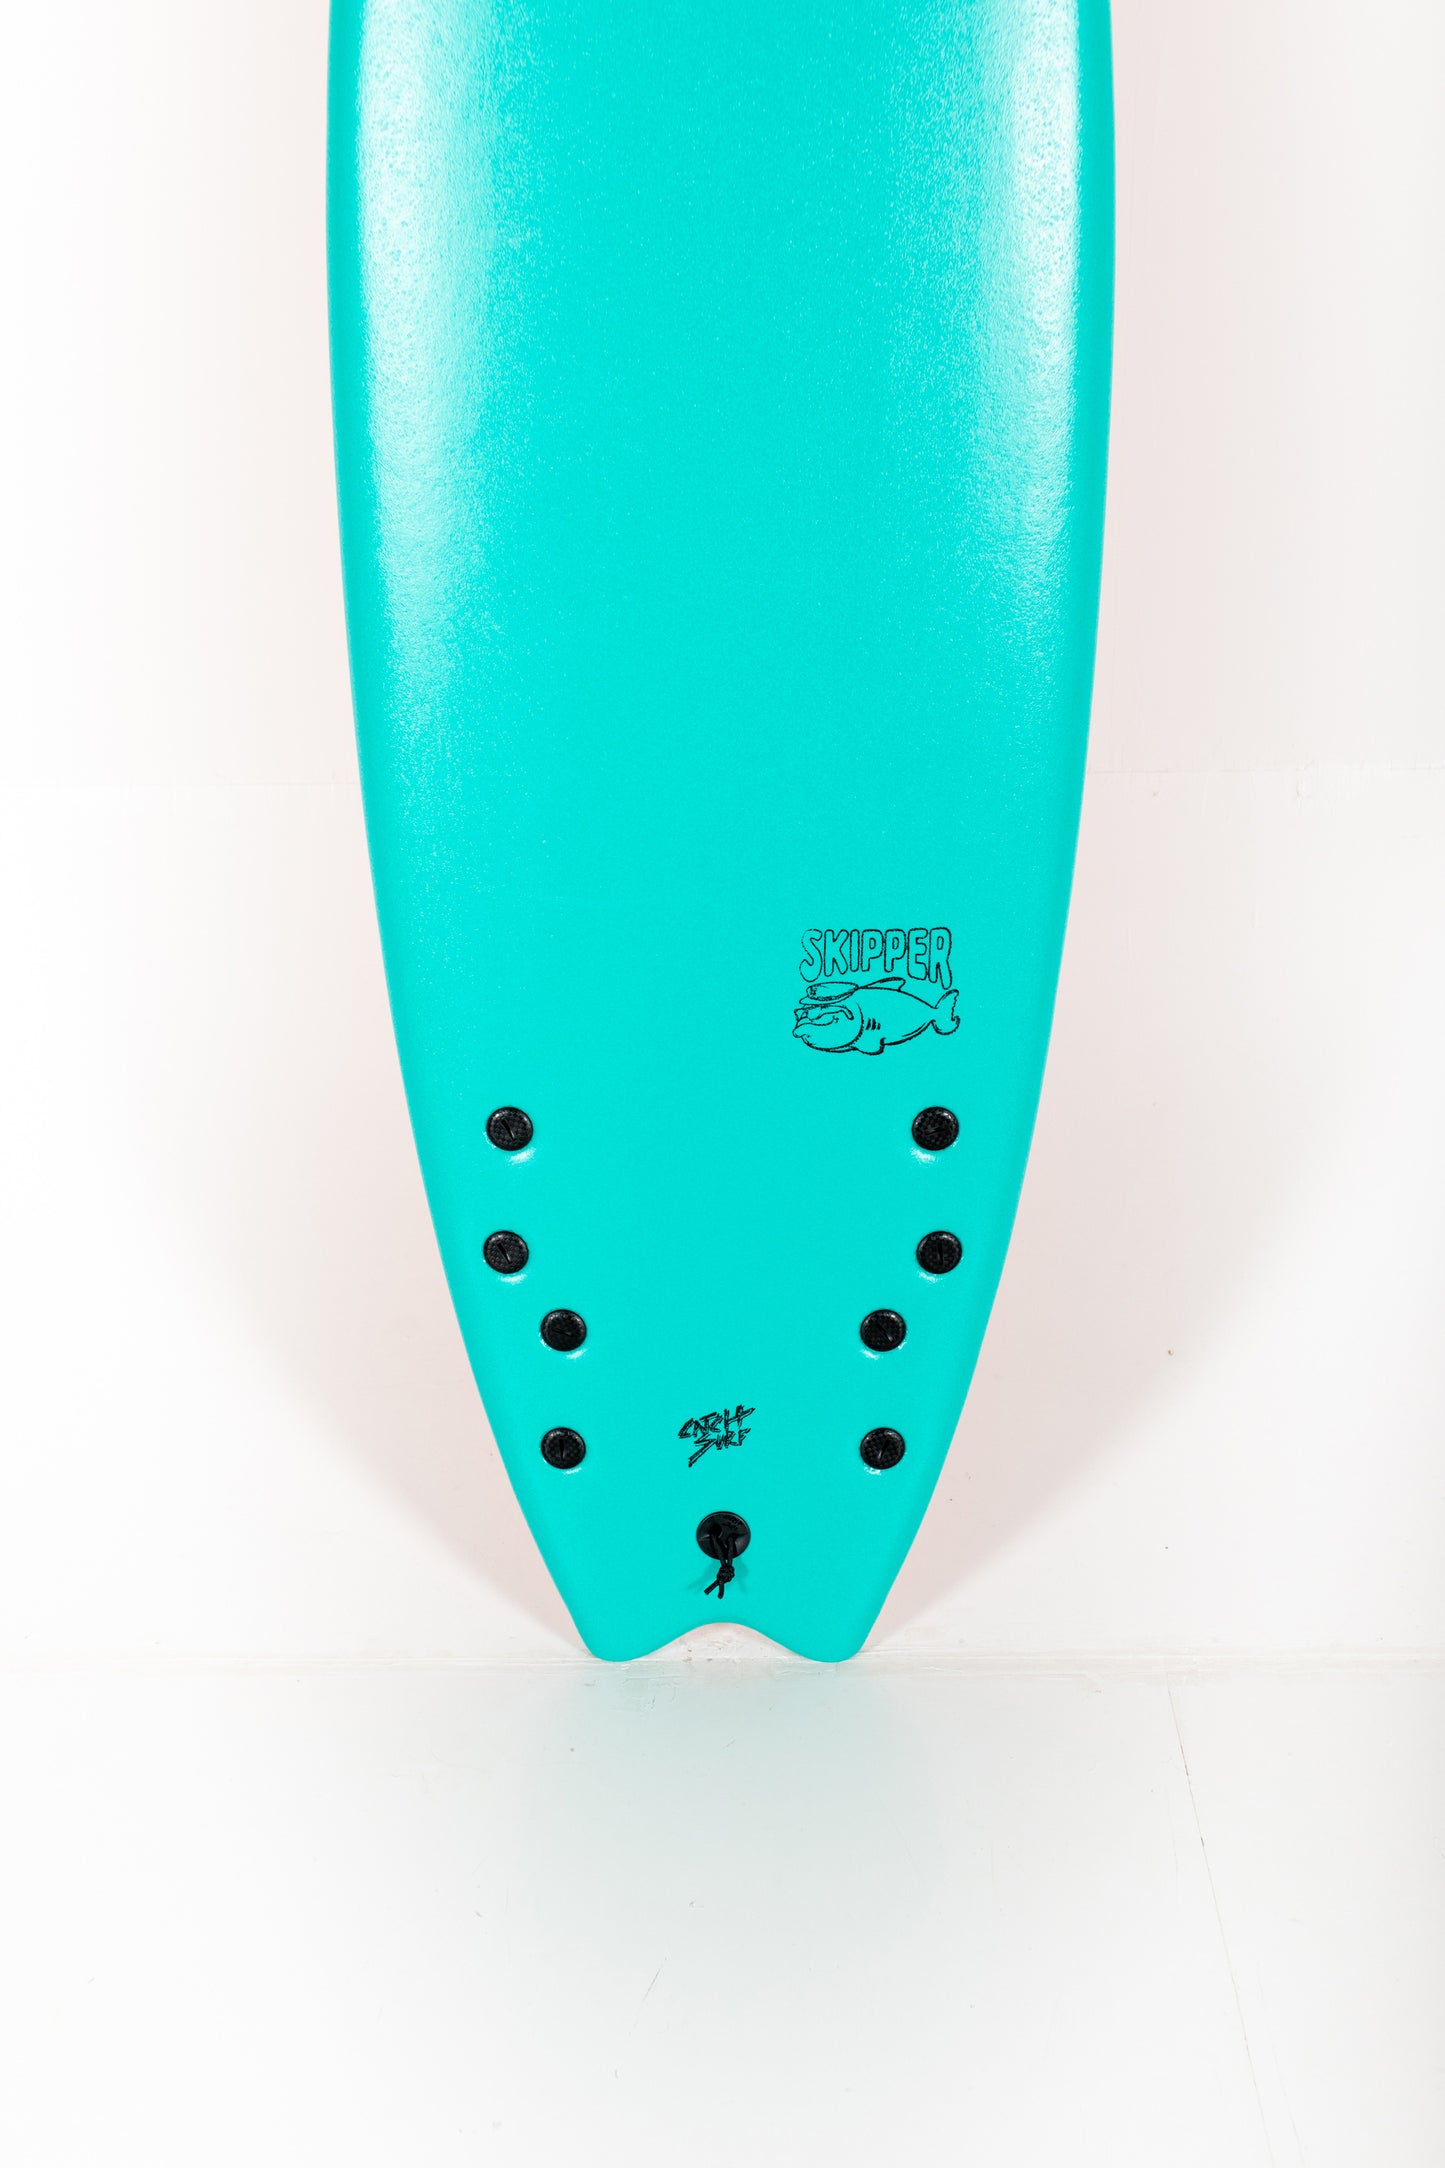 
                  
                    Pukas Surf Shop - Catch Surf - ODYSEA 60 SKIPPER QUAD - 6'0" x 21.5" x 3" x 48L.
                  
                